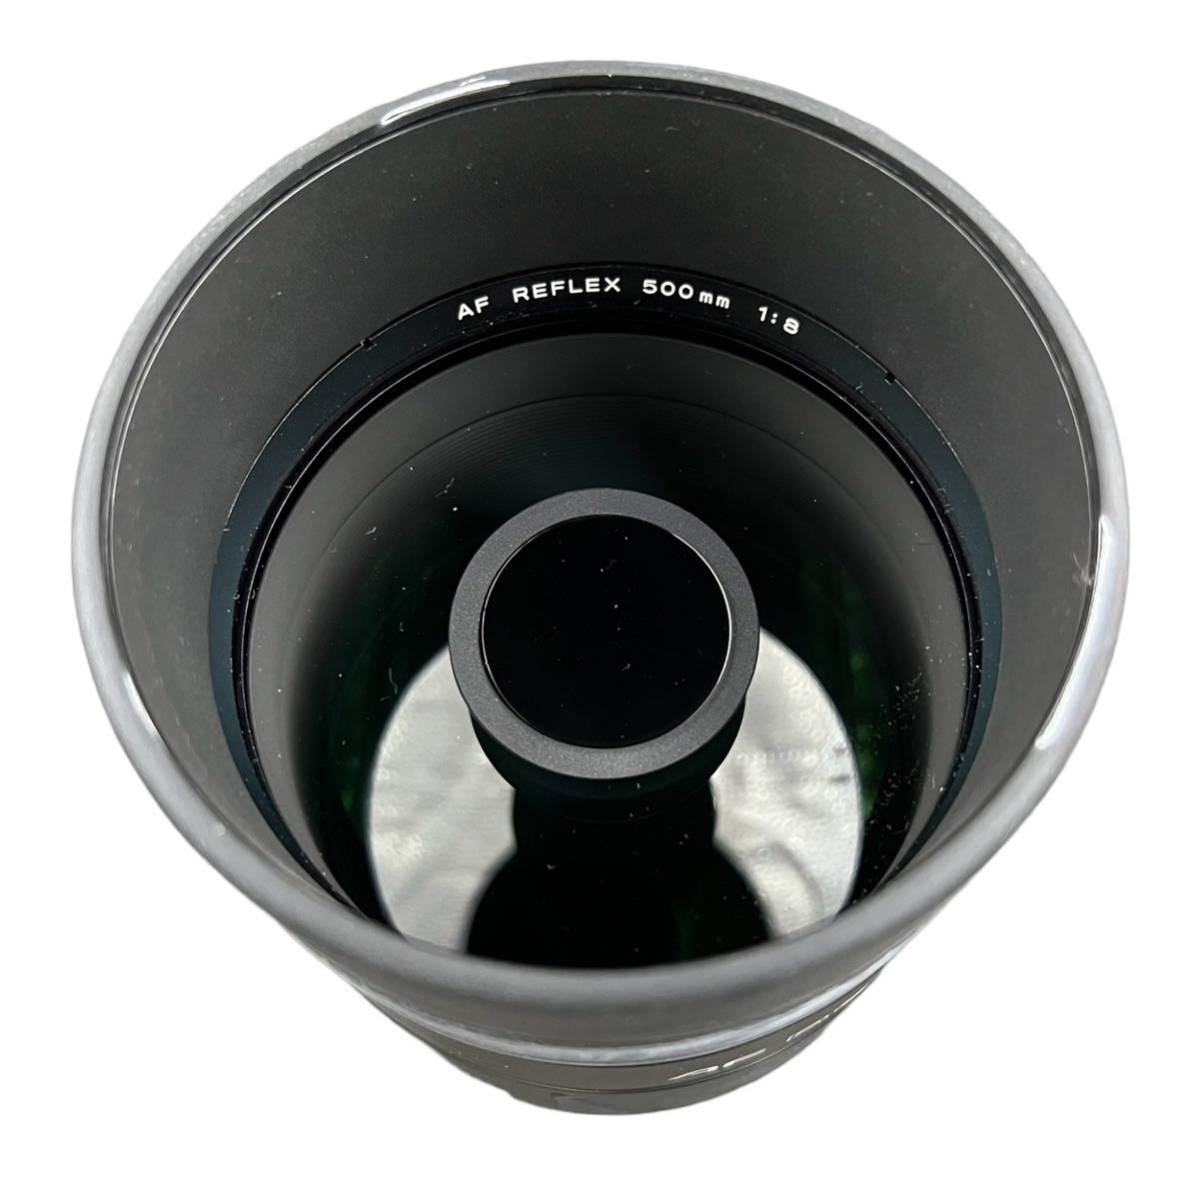 【KF0849】MINOLTA AF REFLEX 500mm 1:8 レンズ ミノルタ ミラーレンズ_画像3